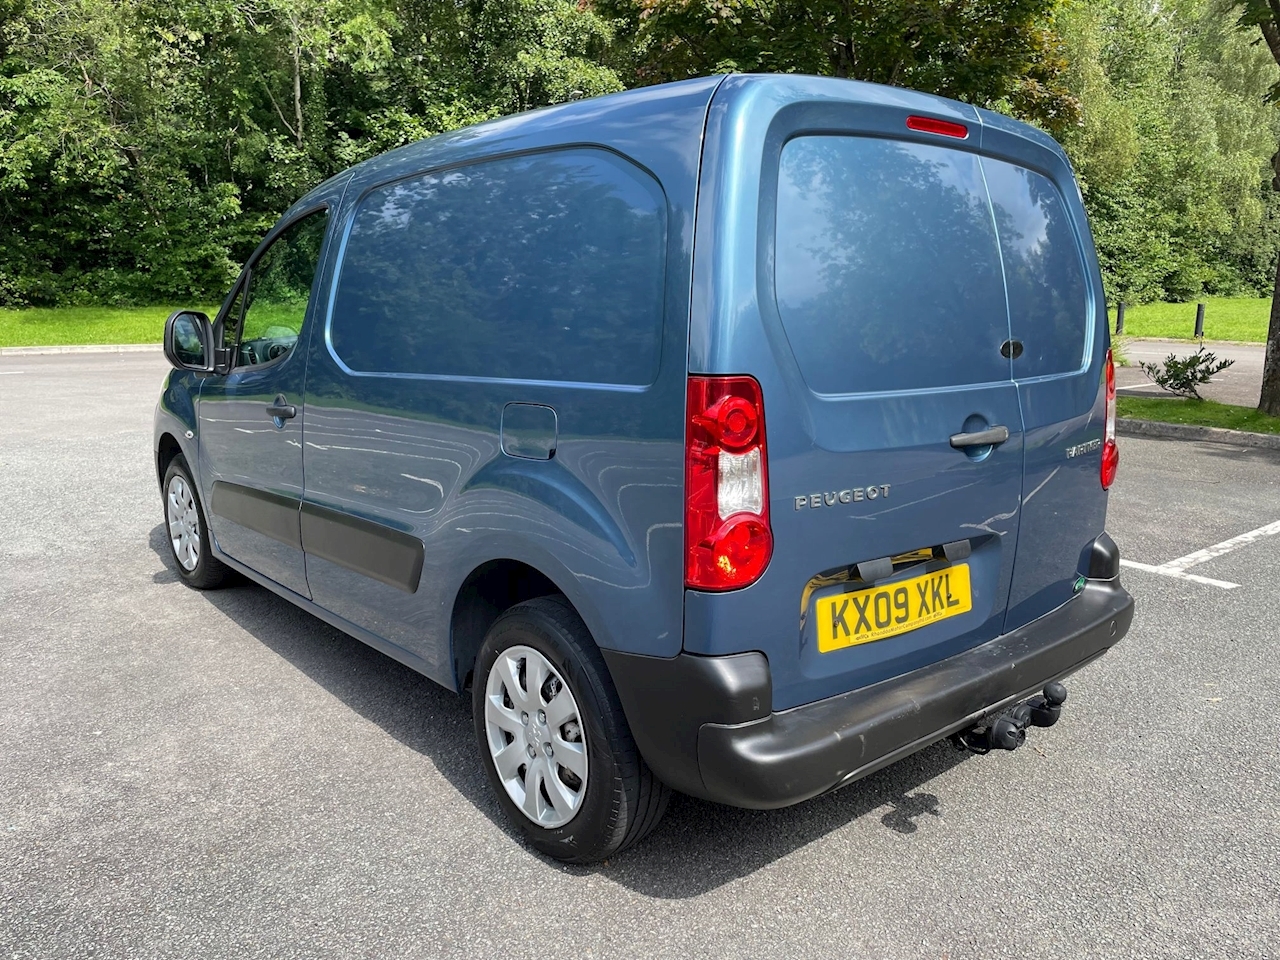 New Peugeot Partner Van For Sale at Sandyford Motor Centre